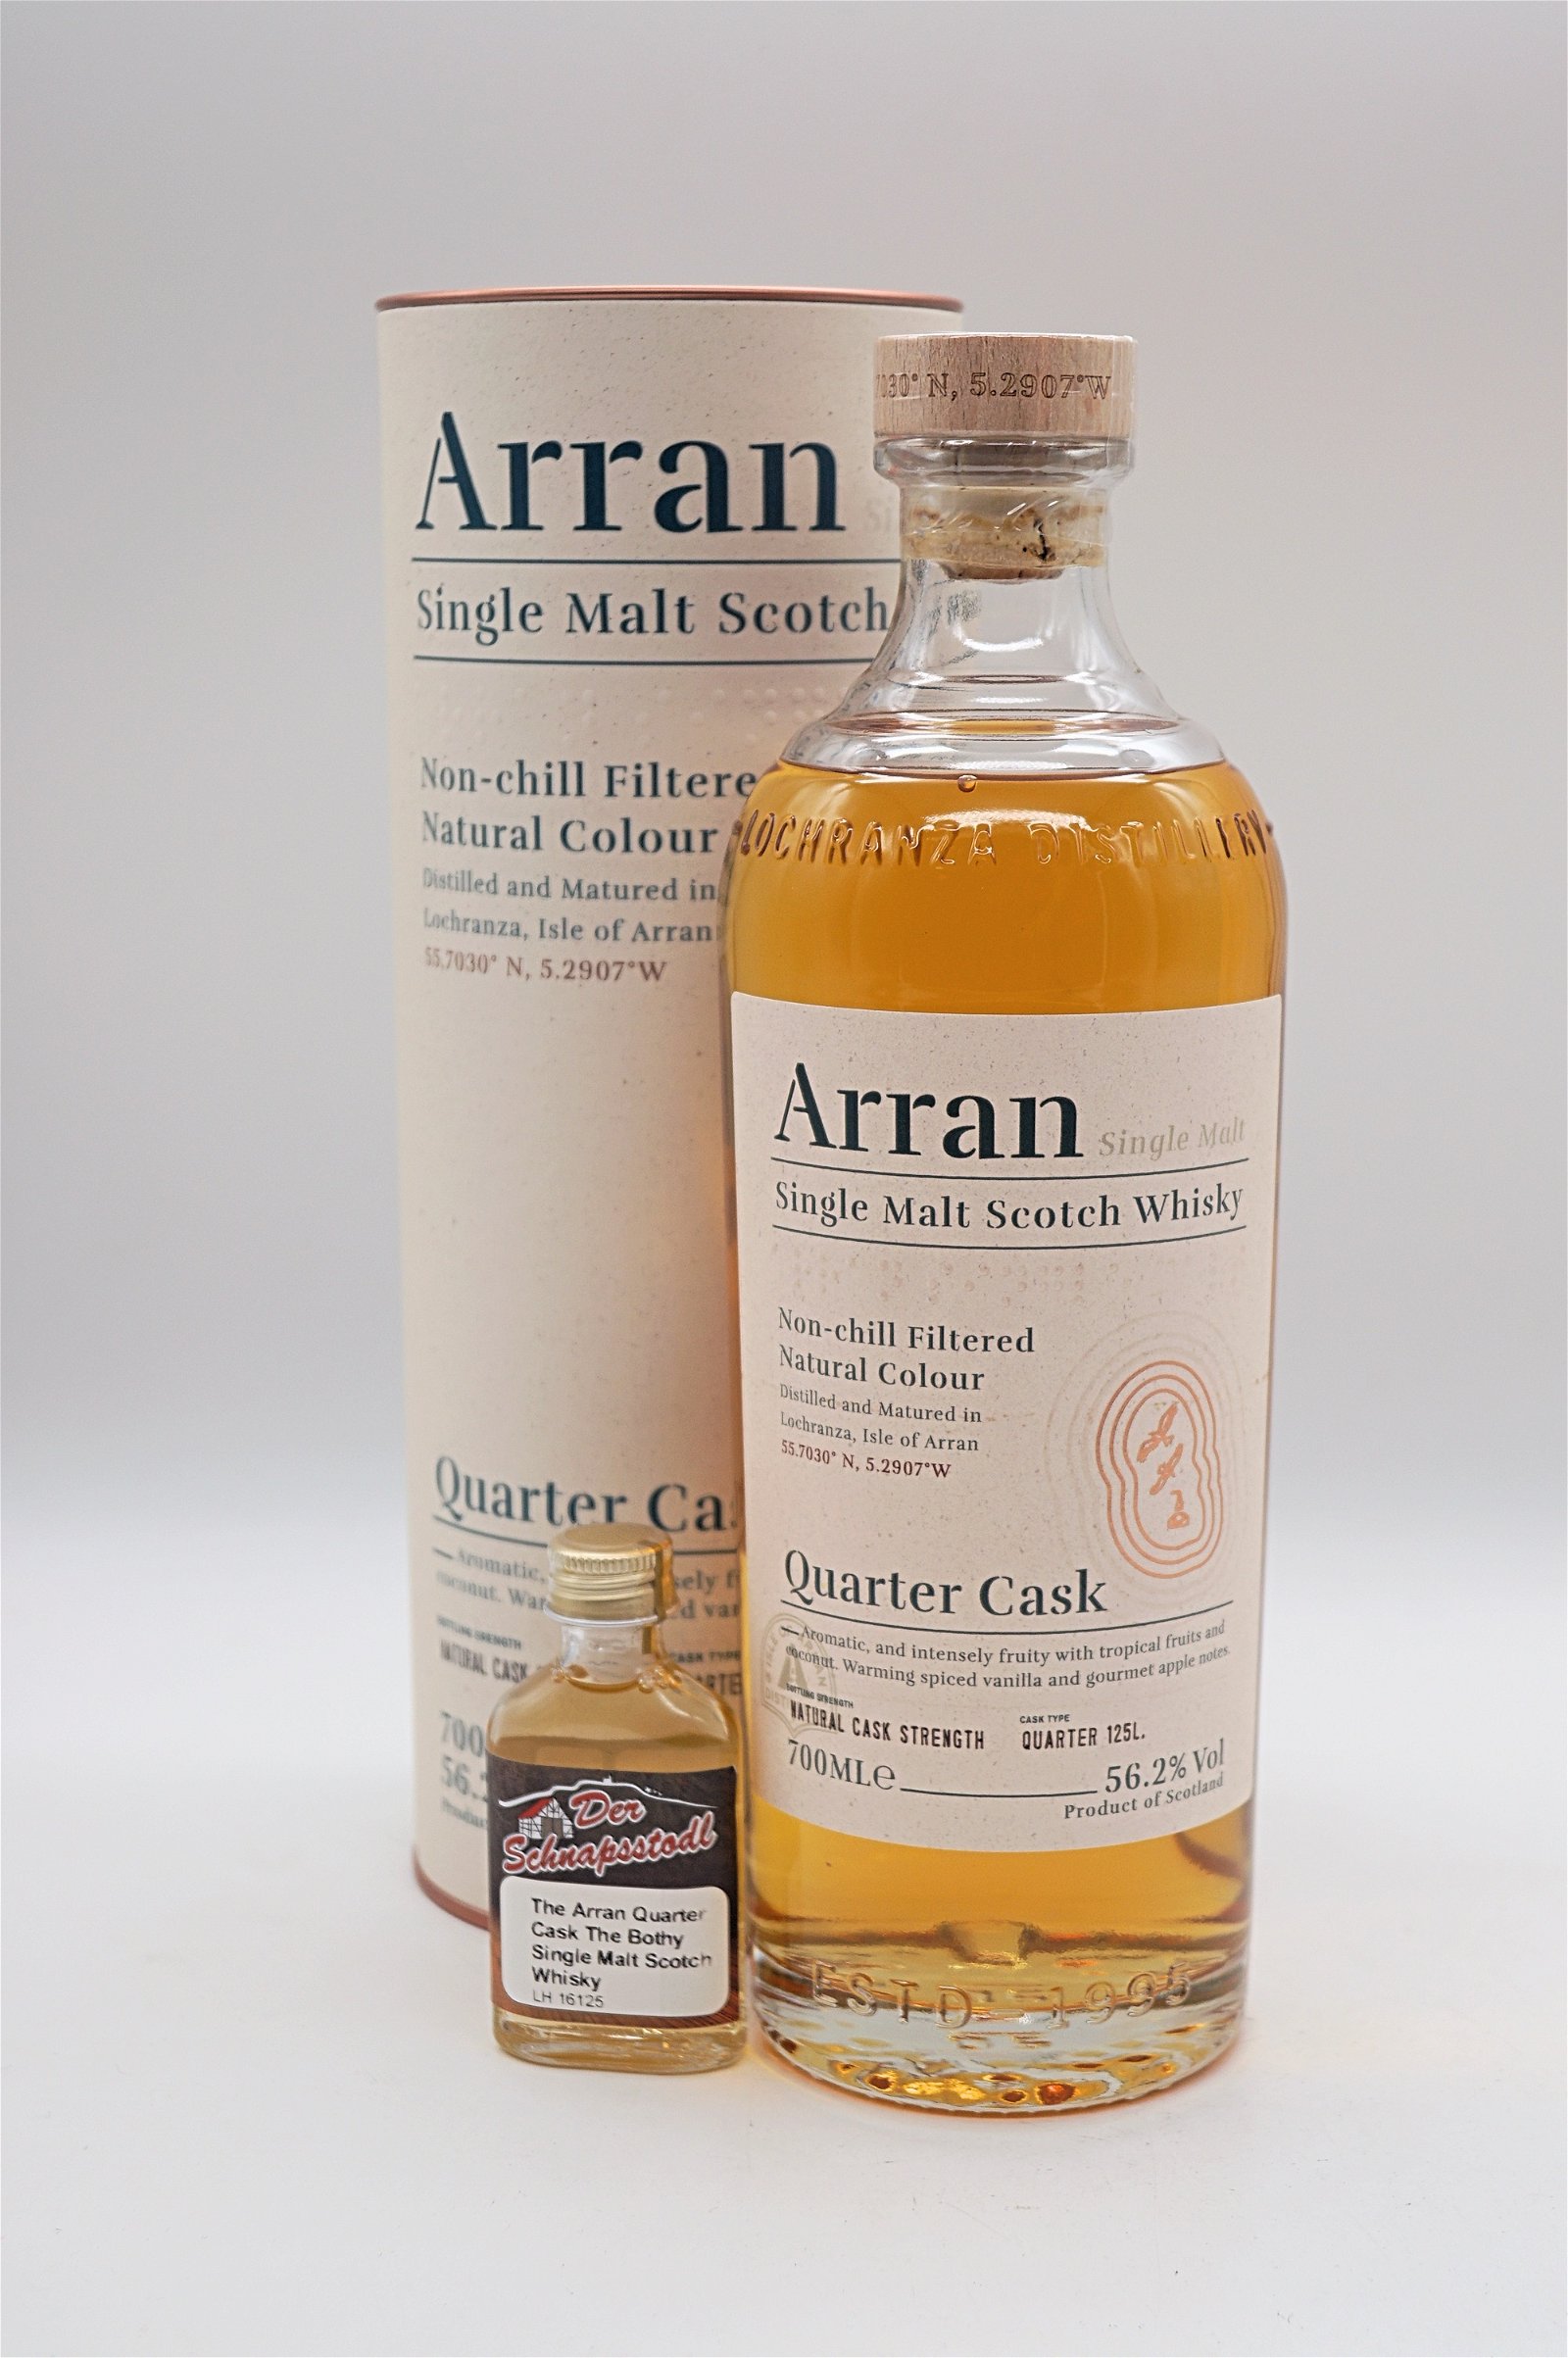 The Arran Quarter Cask the Bothy Single Malt Scotch Whisky 